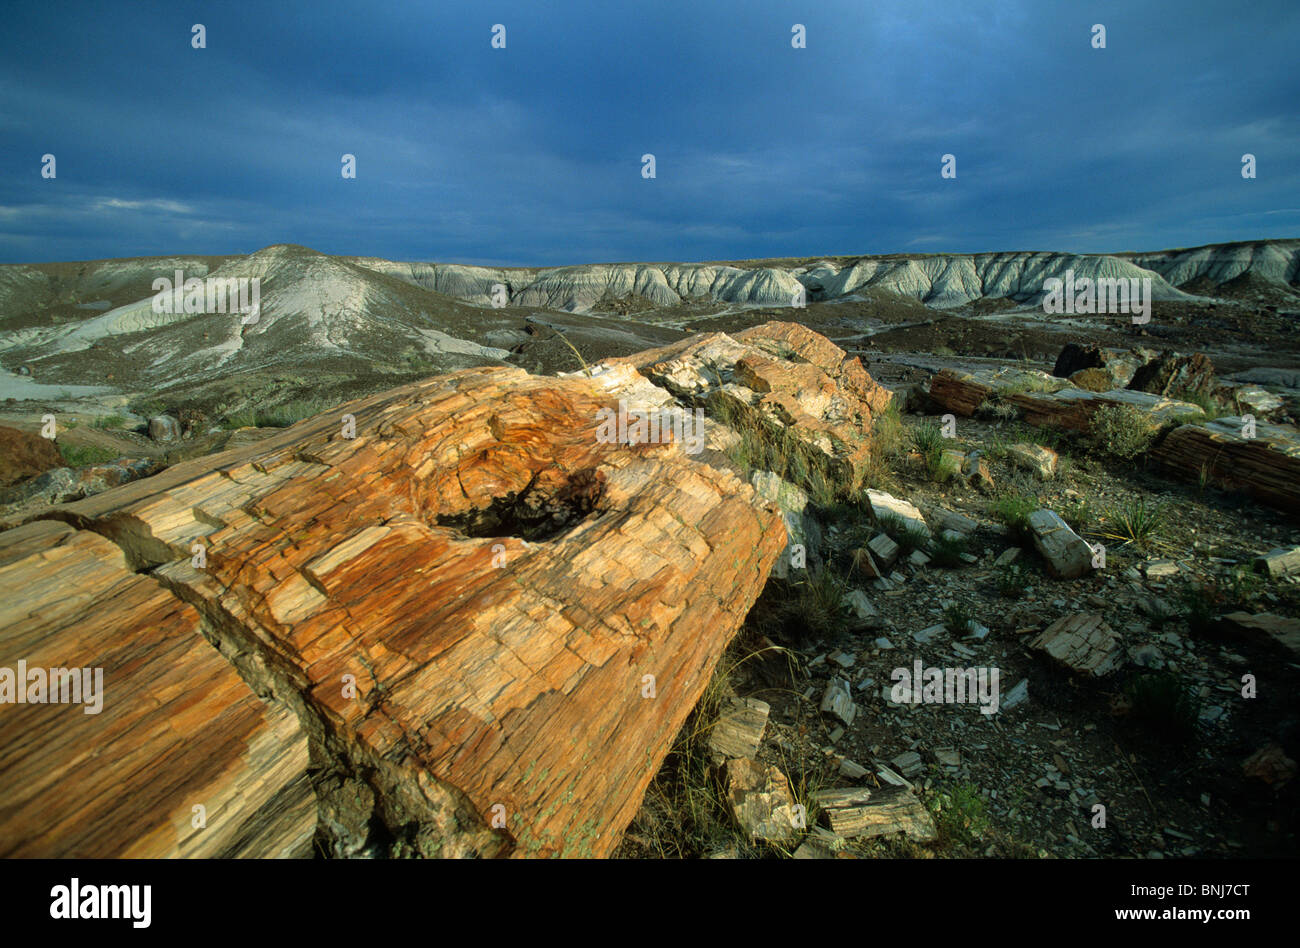 Parque nacional de EE.UU. Arizona troncos fosilizados de madera fosilizados Bosque Petrificado América del Norte Estados Unidos de América paisaje Foto de stock